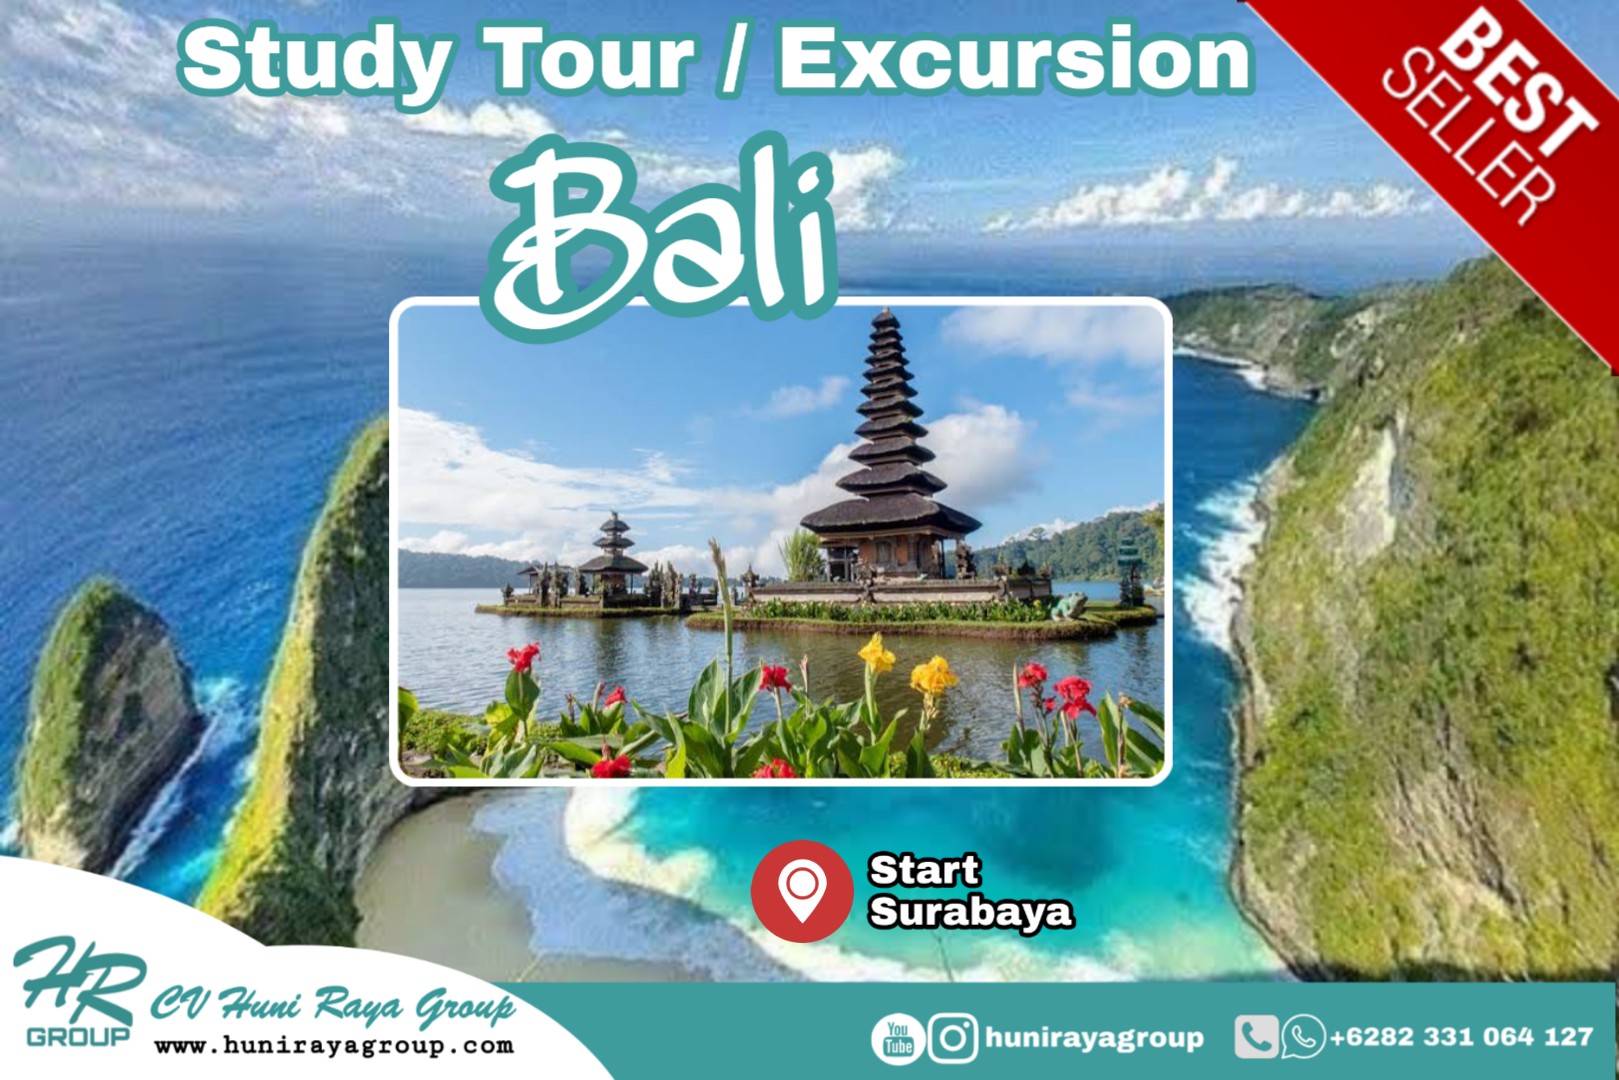 STUDY TOUR EXCURSION SURABAYA BALI  Huni Raya Group